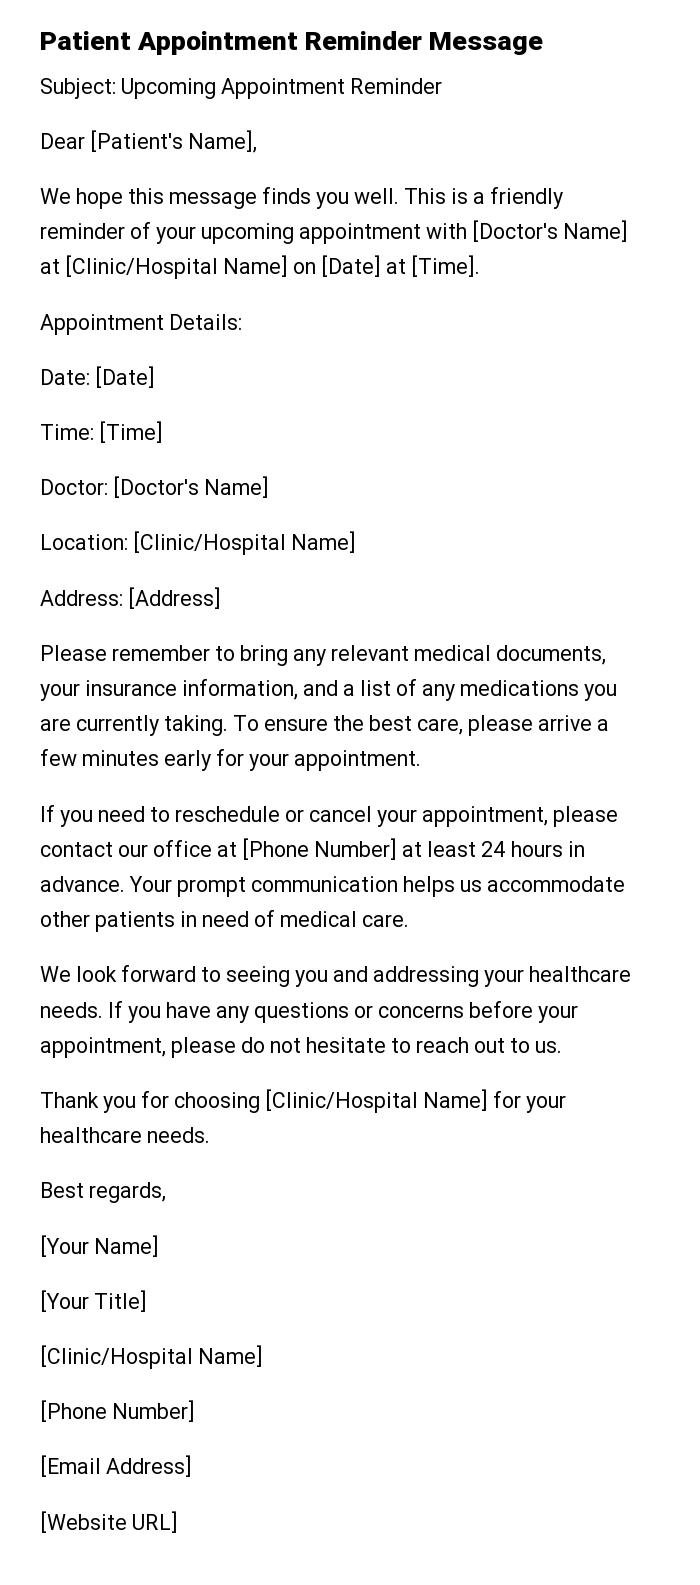 Patient Appointment Reminder Message